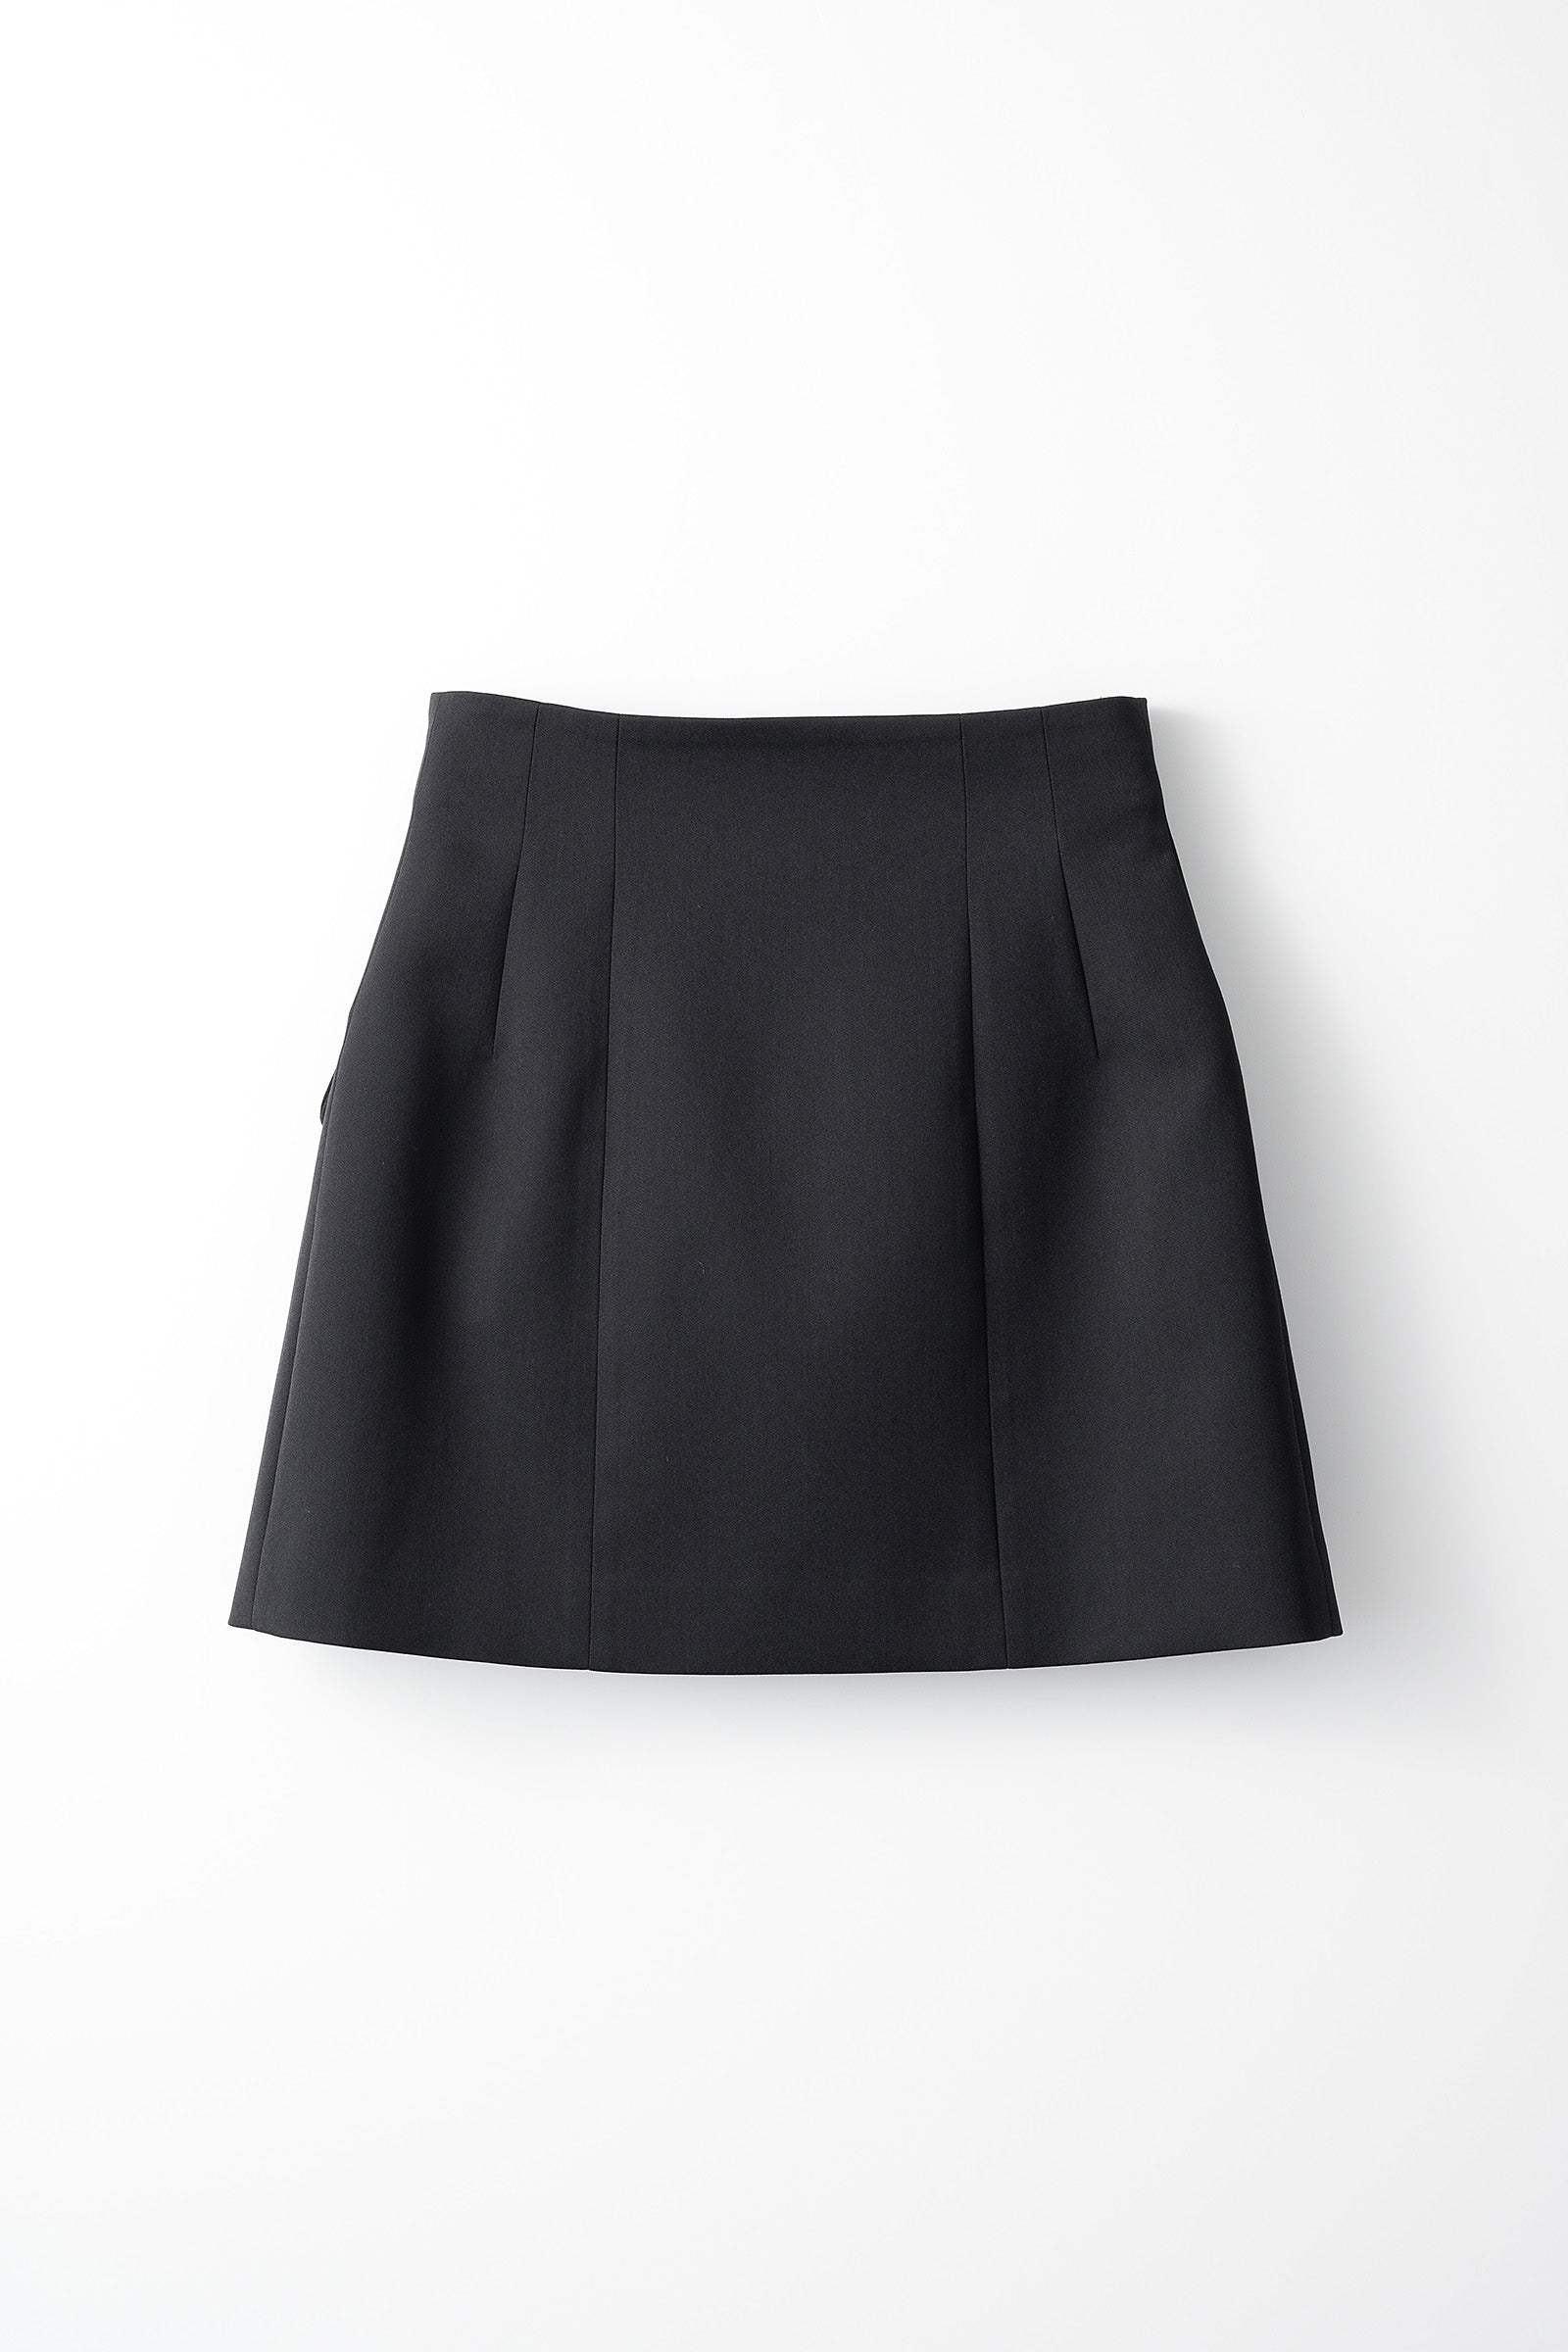 Monochrome wrapped skirt (Black)